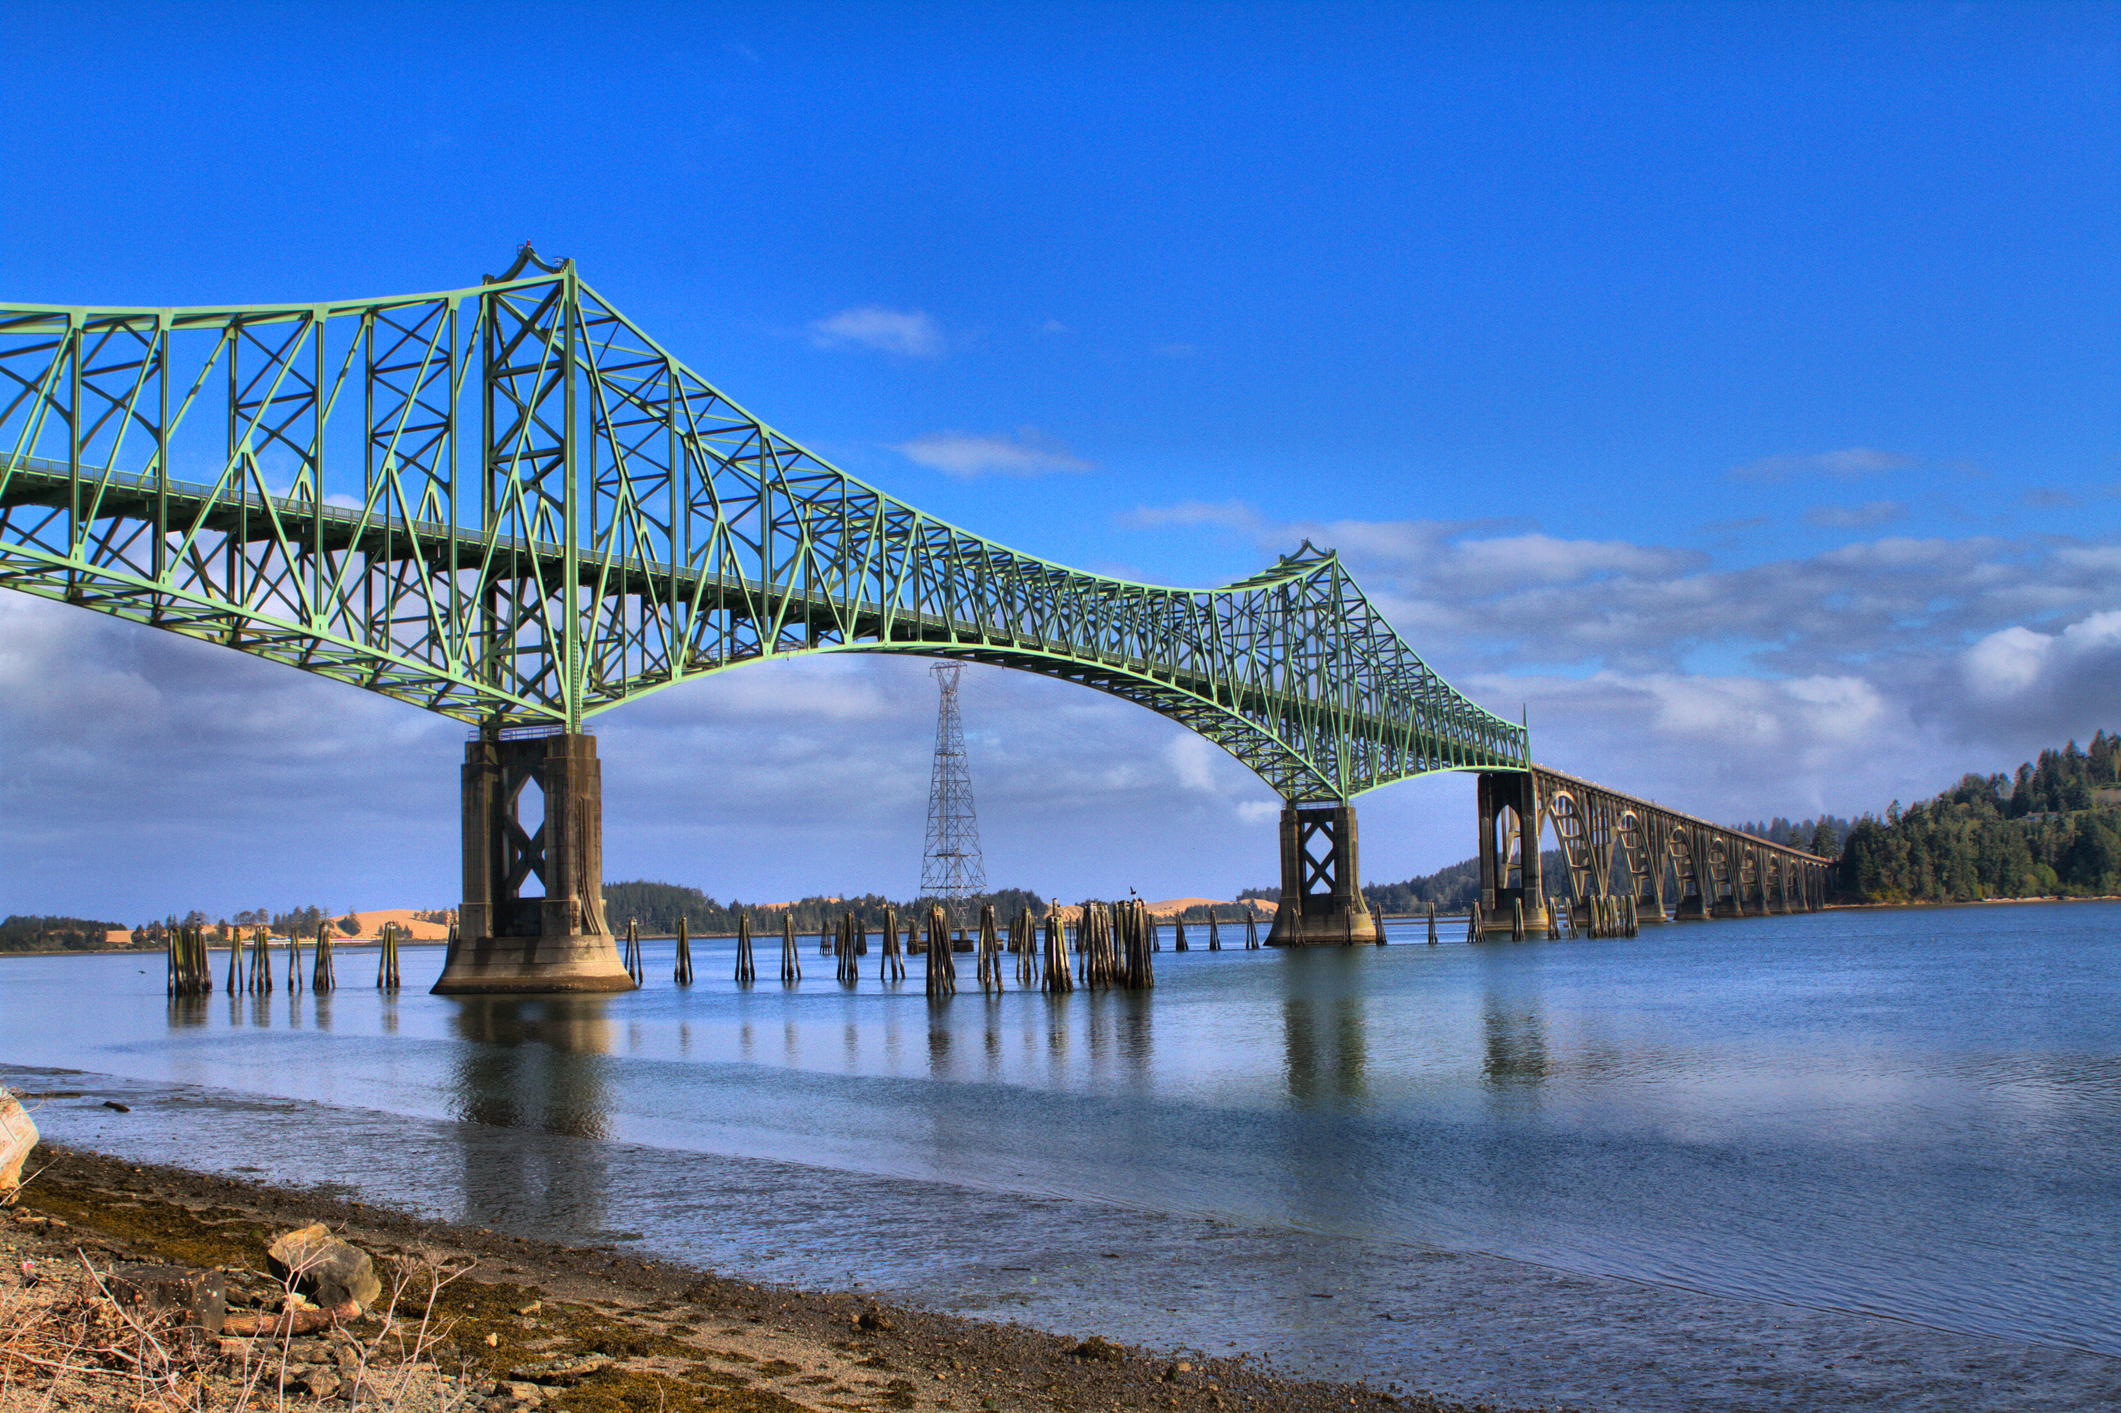 A truss bridge spans a river under a partly cloudy sky